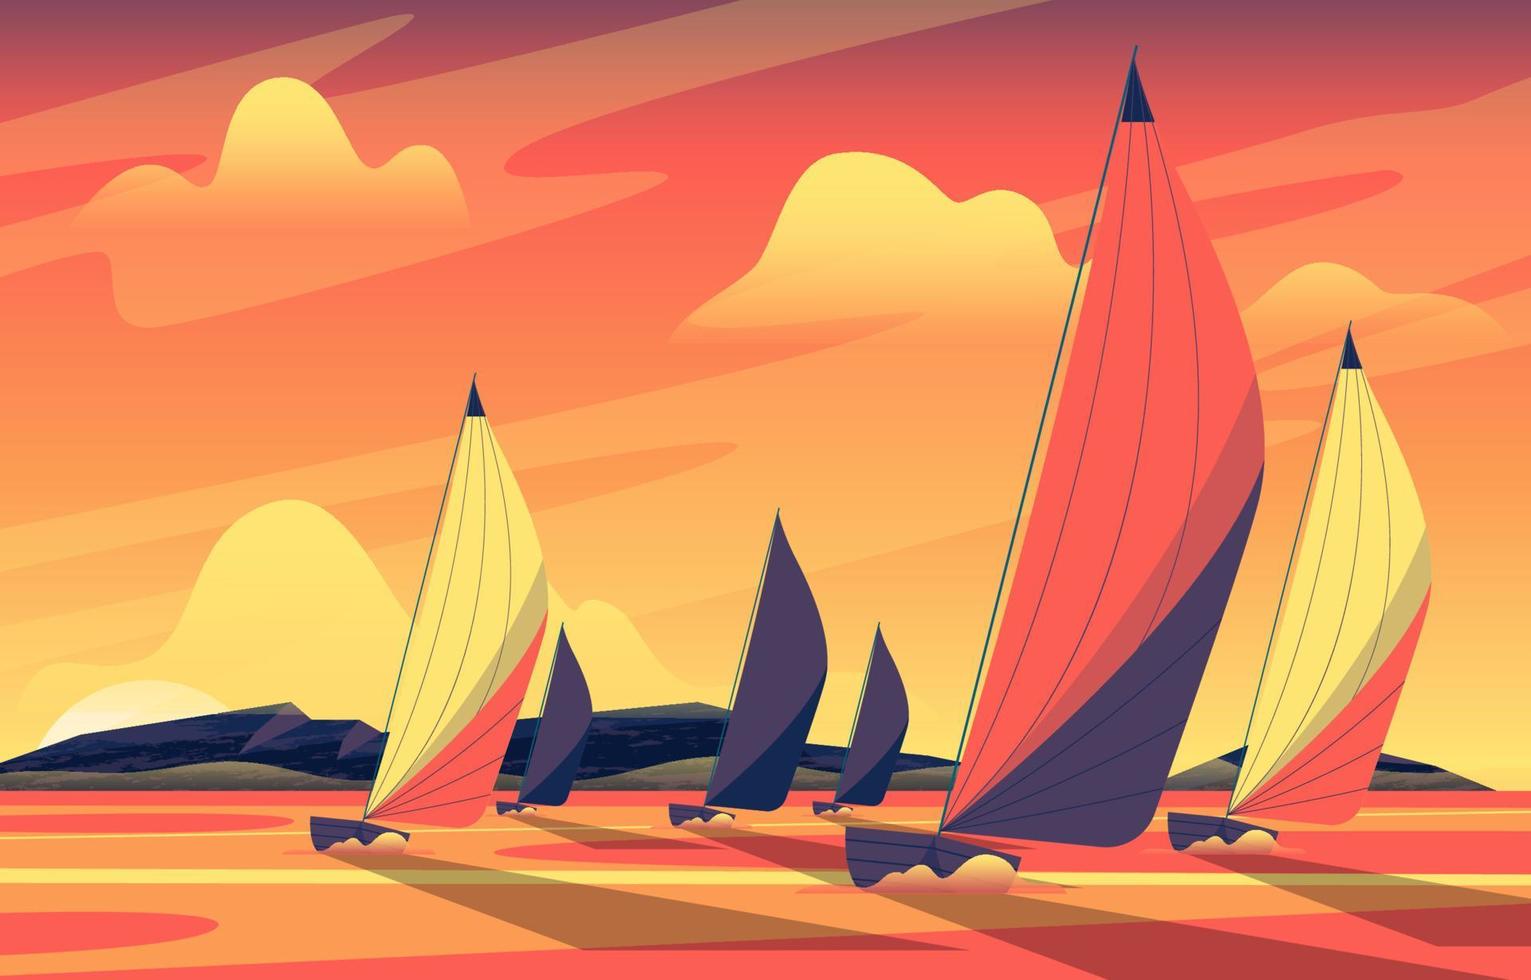 Boat Sailing at Sunset Time vector